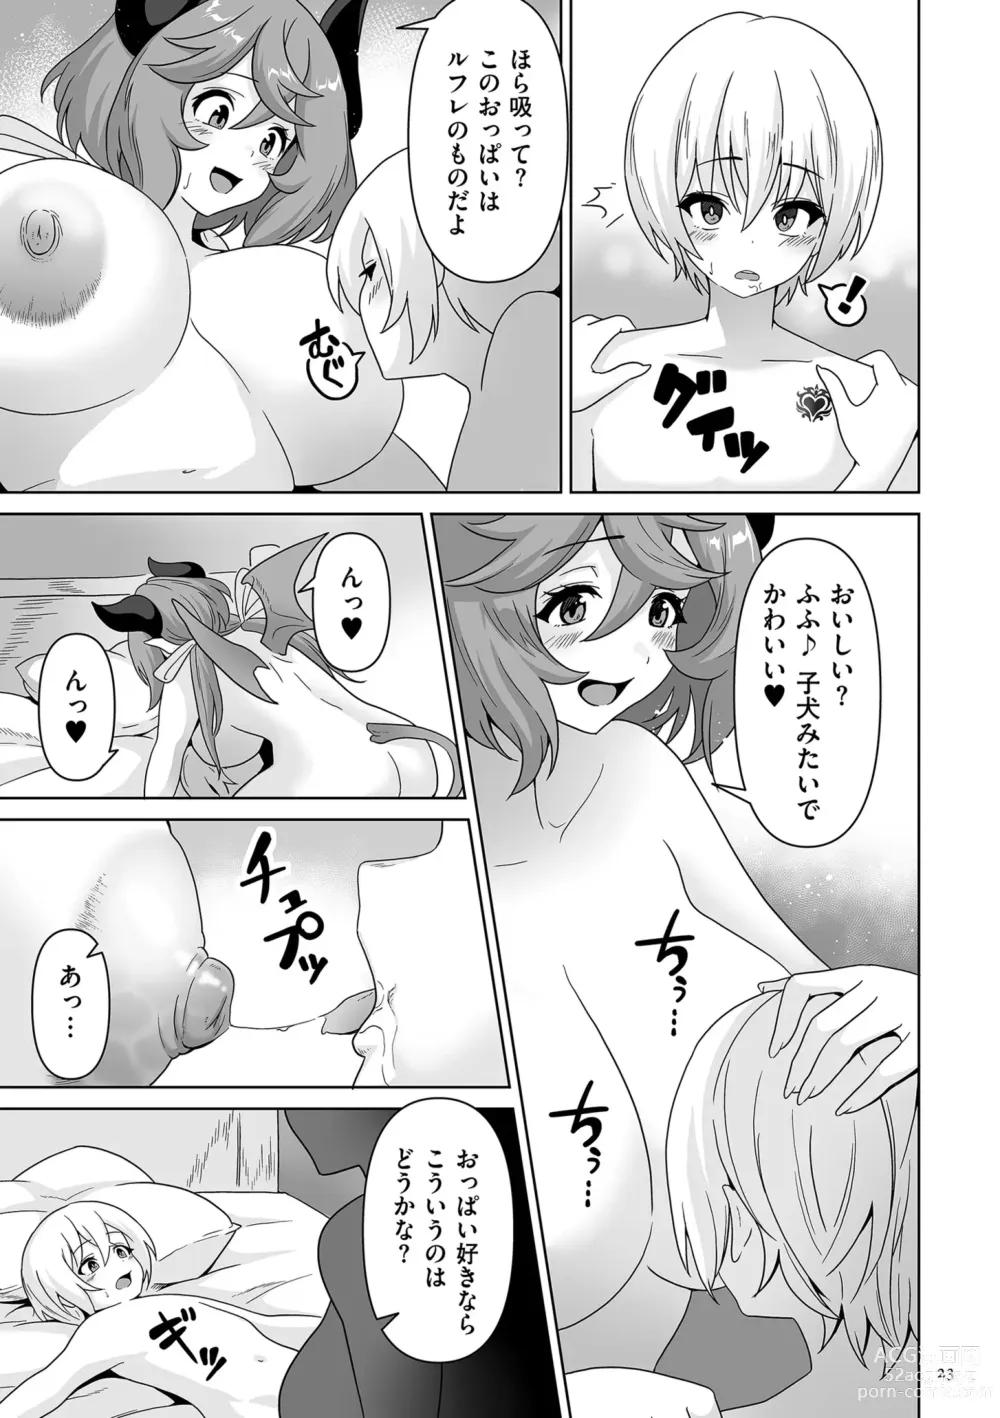 Page 23 of manga Succubus Kingdom